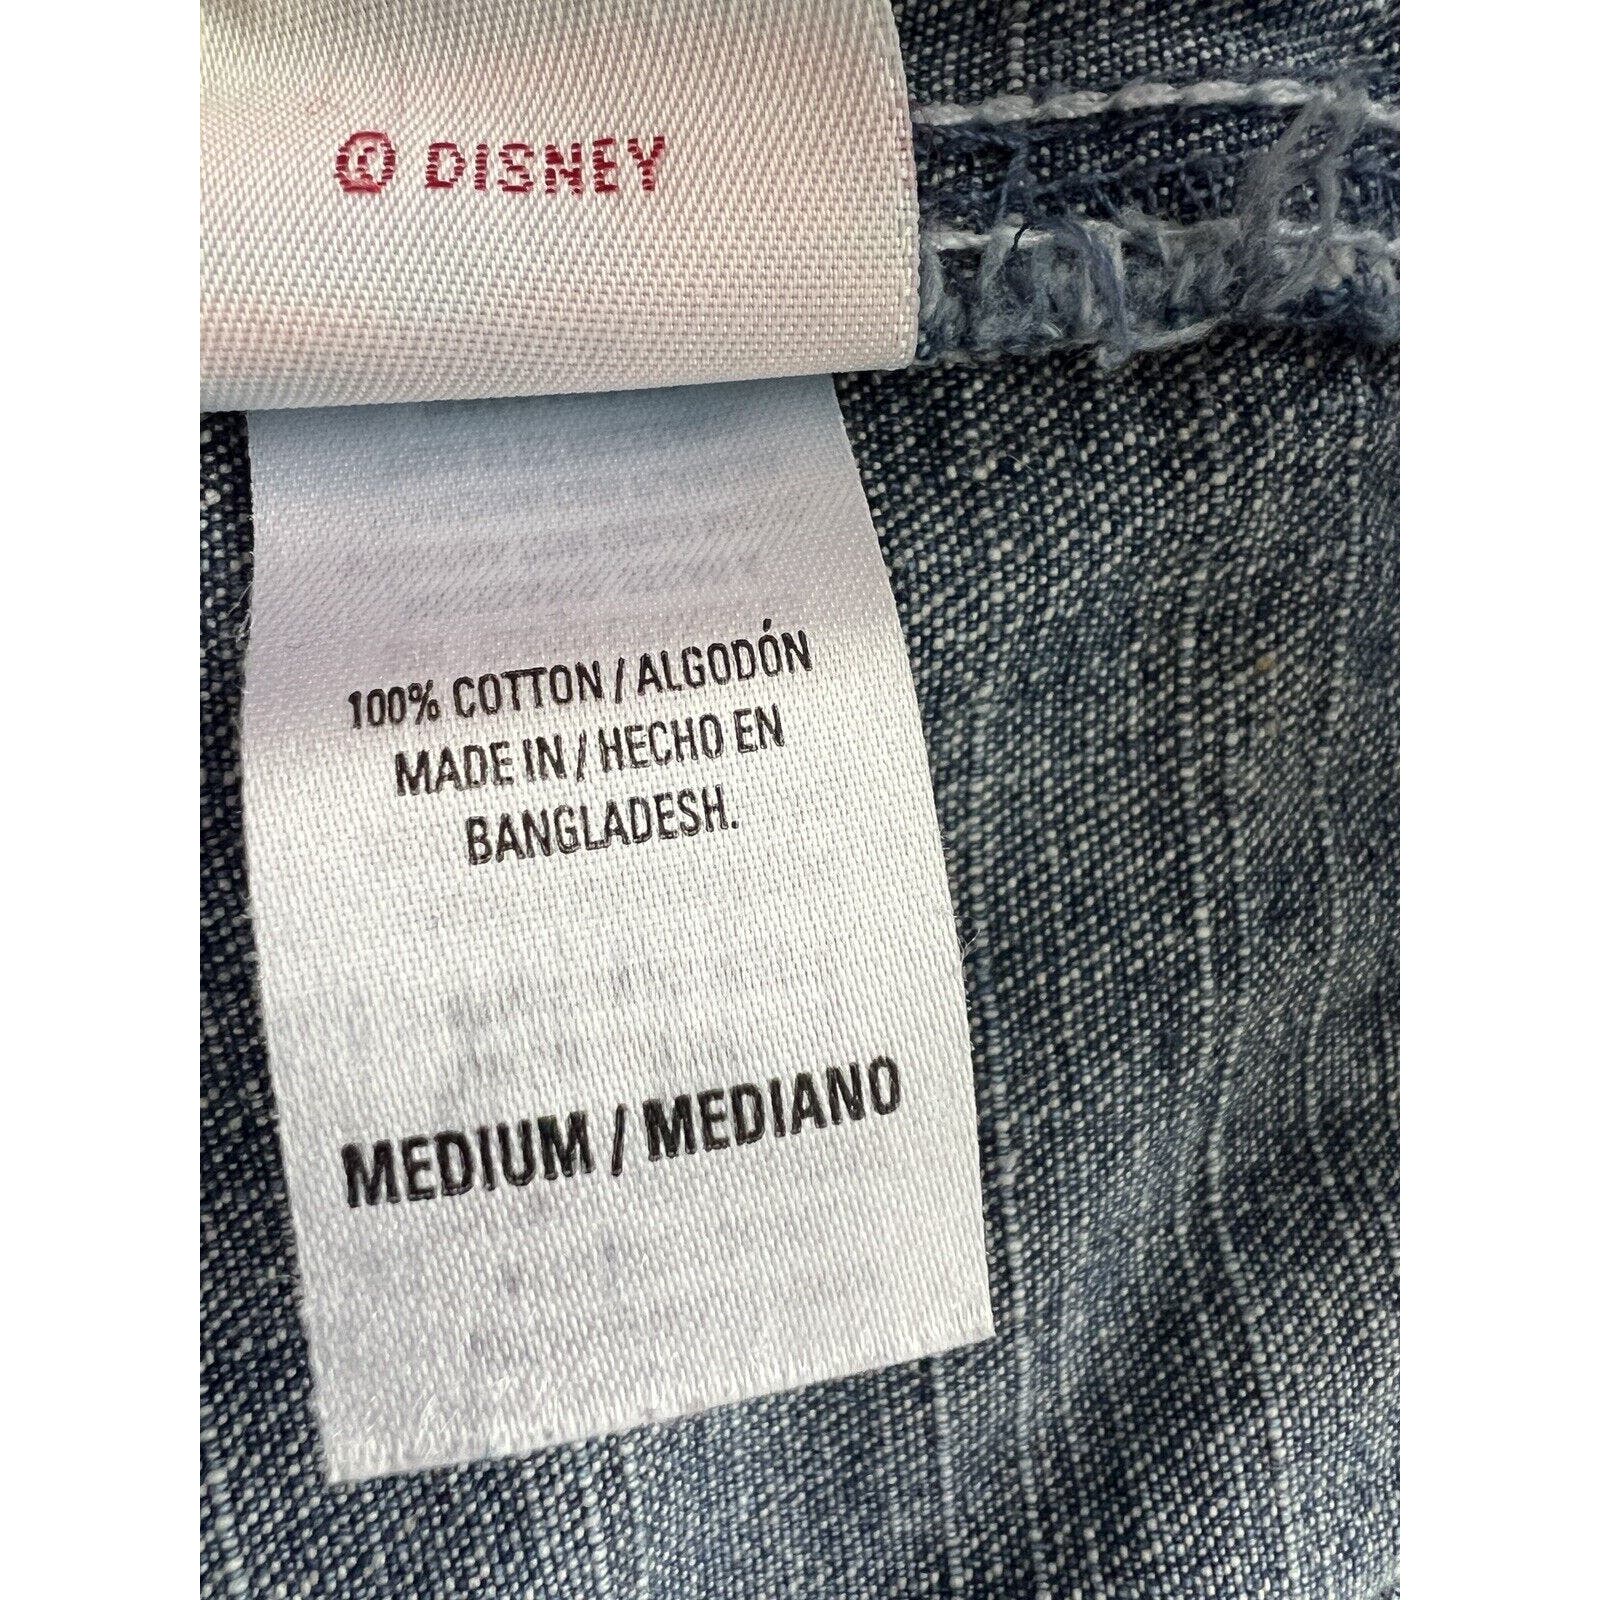 Disney Denim Overalls Women's Medium Straight Leg Vintage Y2K Jeans Cargo